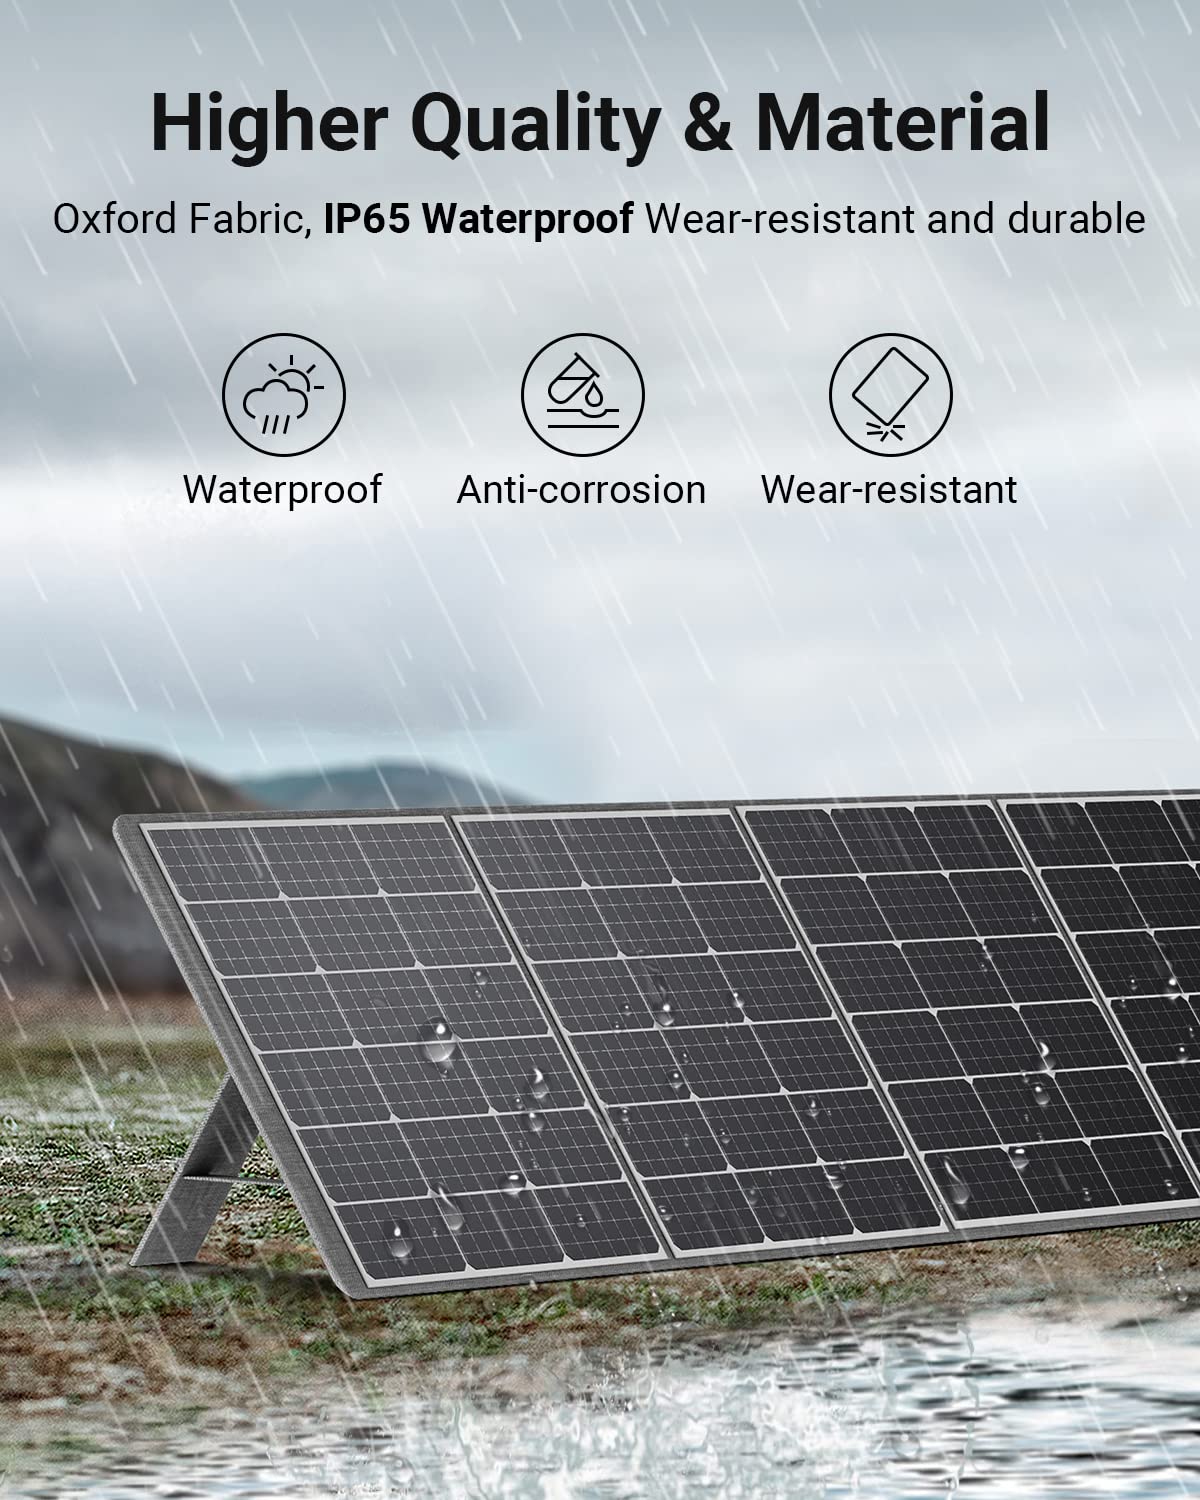 AFERIY ‎‎AF-S200 Portable Solar Panel 200 Watt